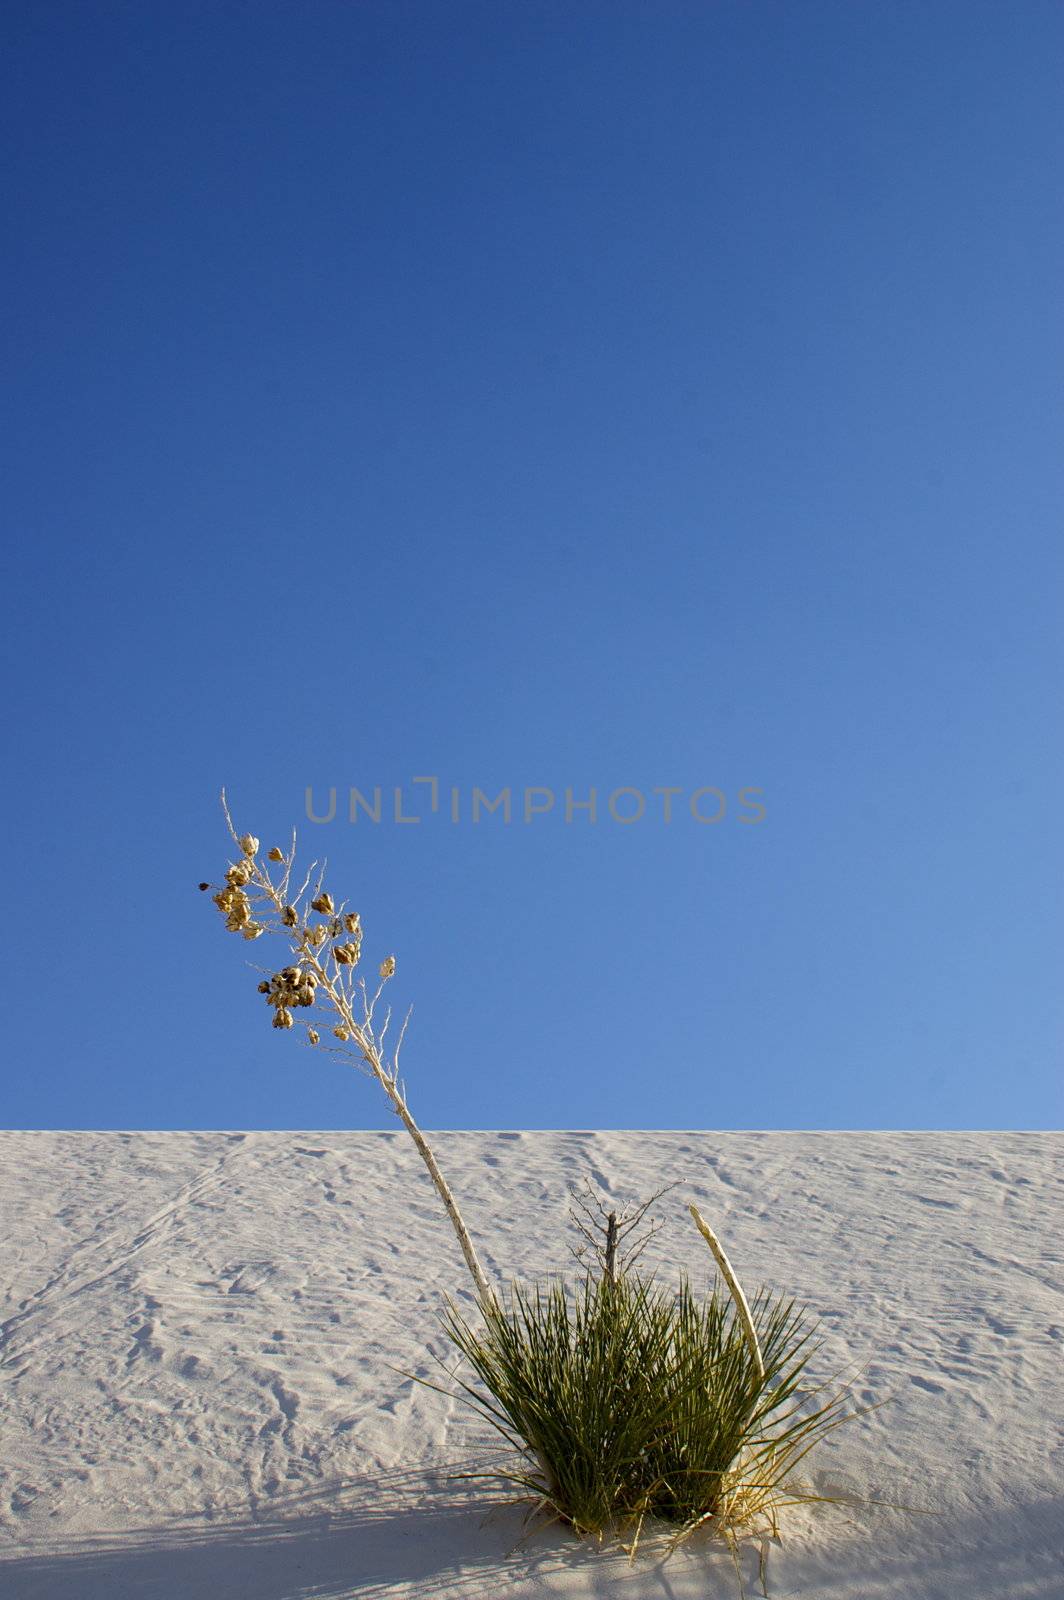 White Sands National Monument - Desert Plant by PrincessToula